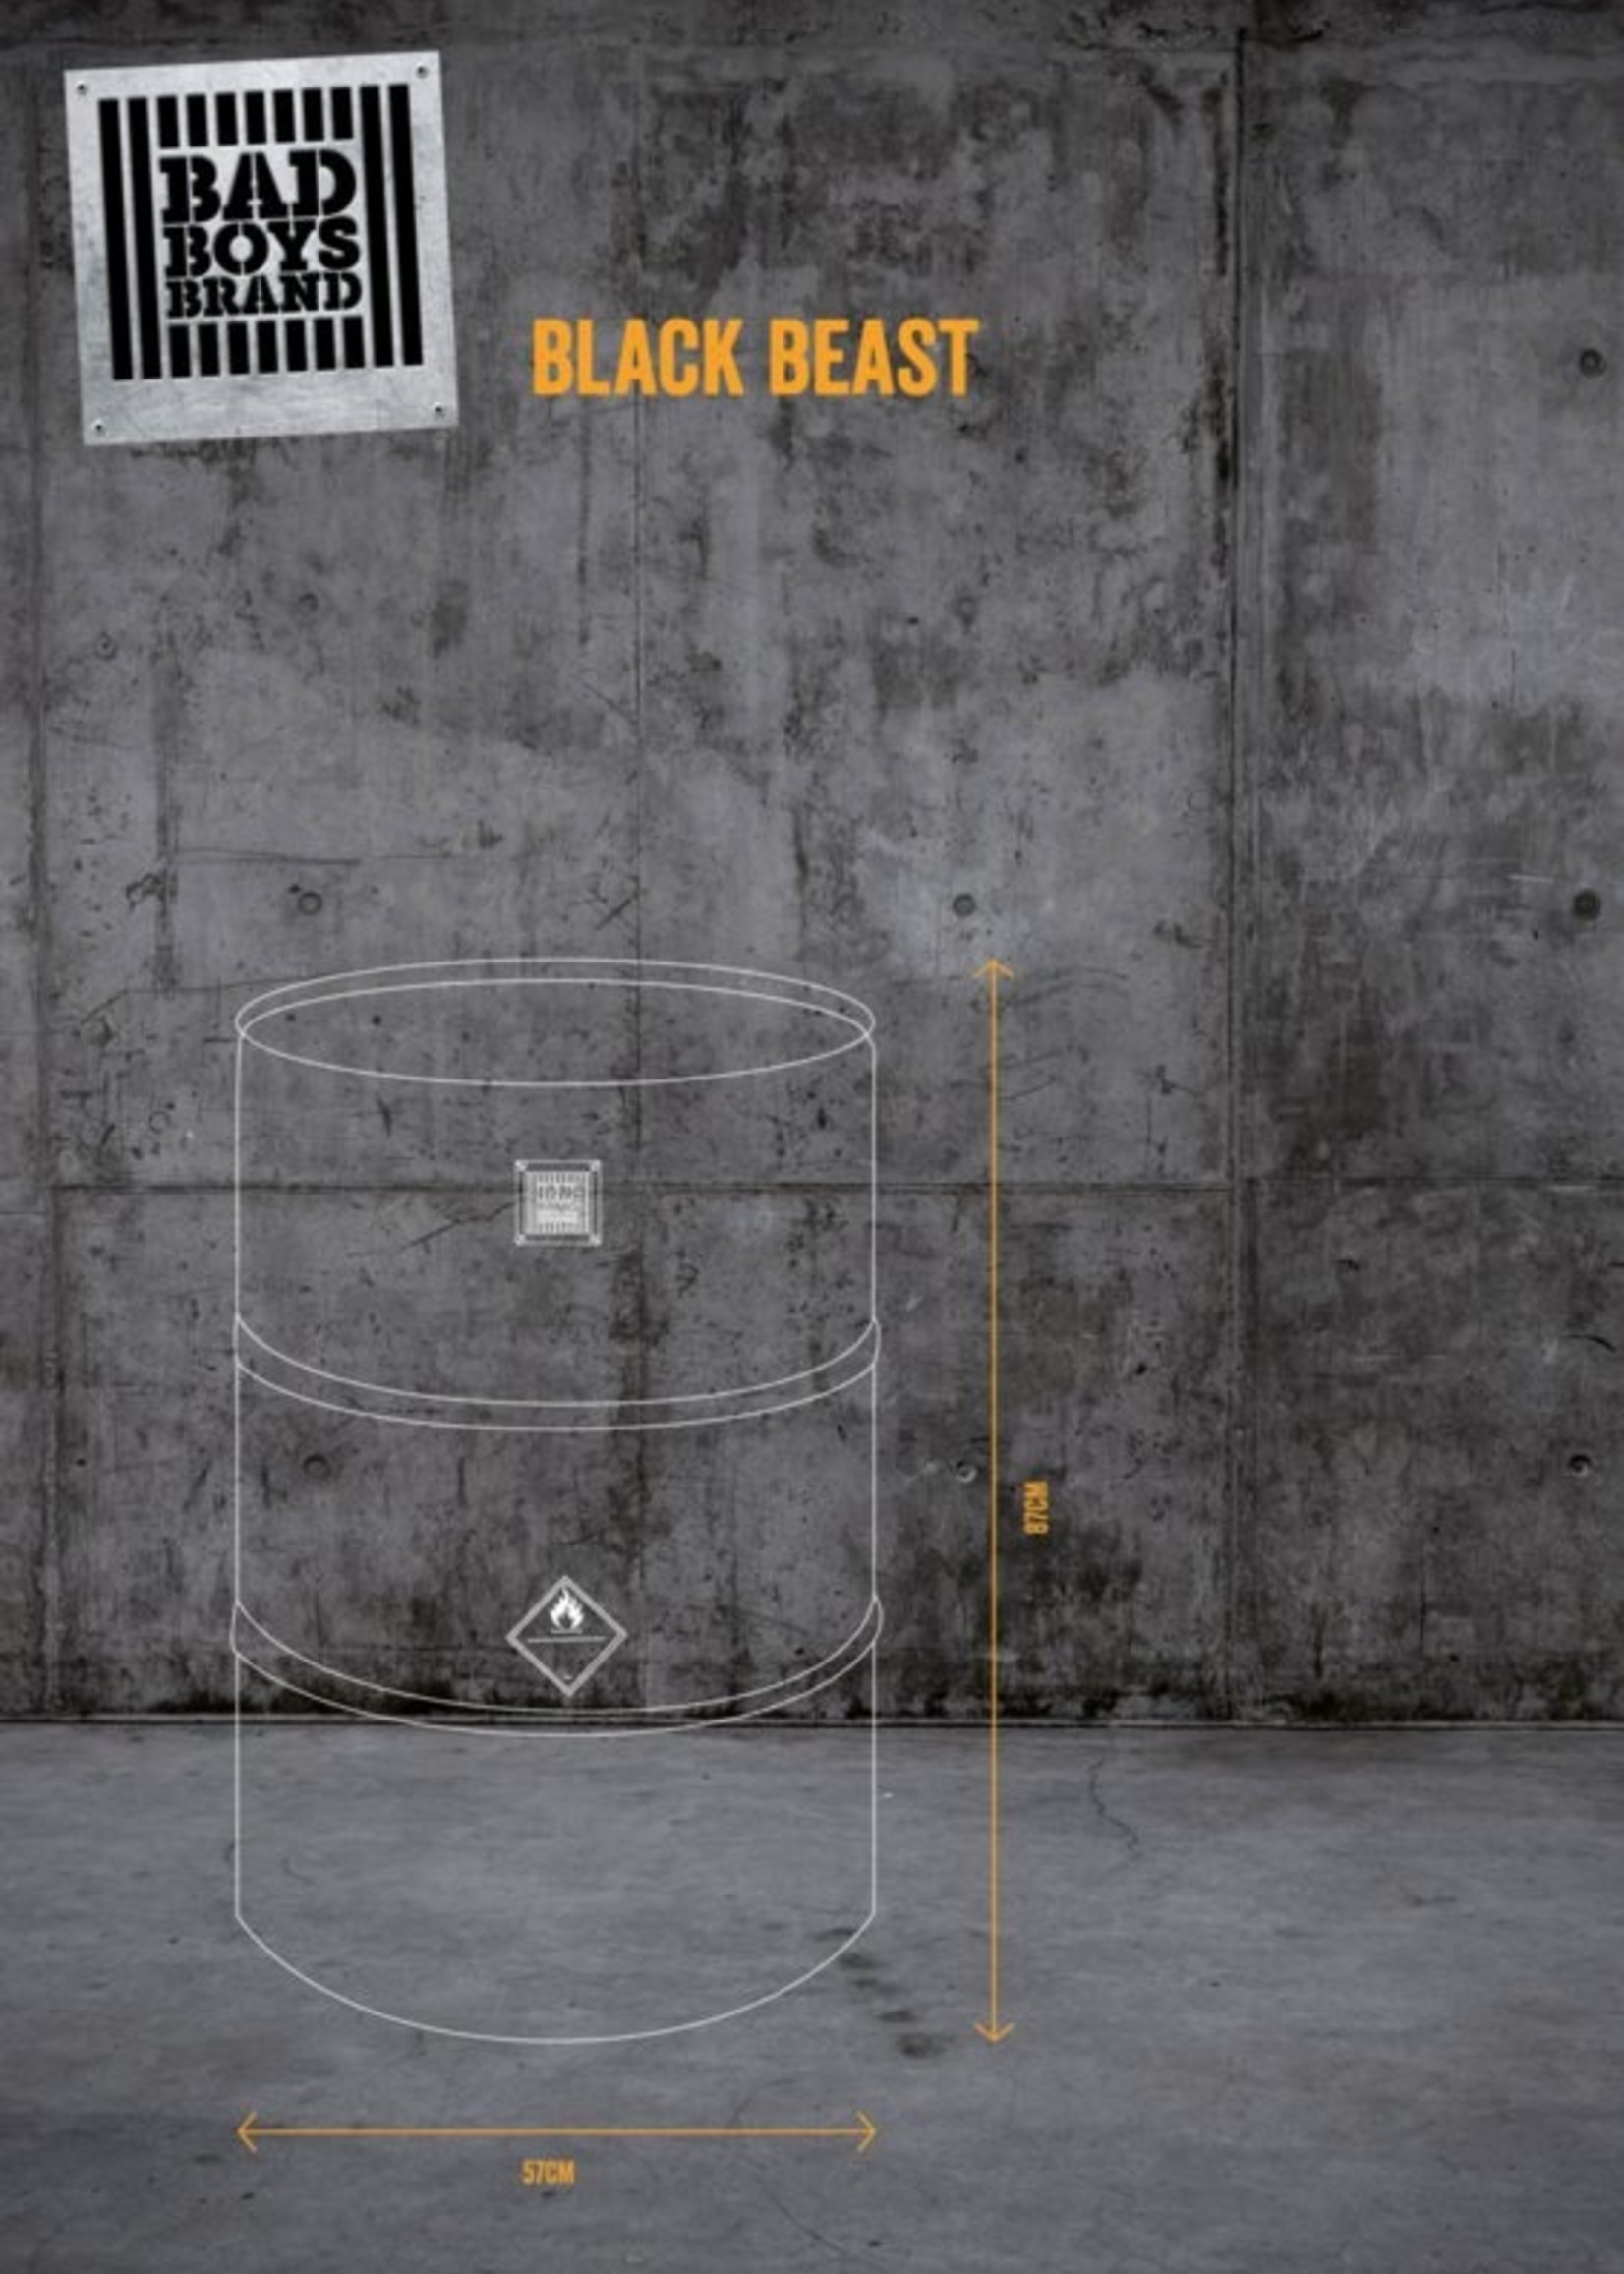 Bad Boys Brand Black Beast - Barbecue - Vuurkorf - BadBoysBrand - 100% Made in Jail